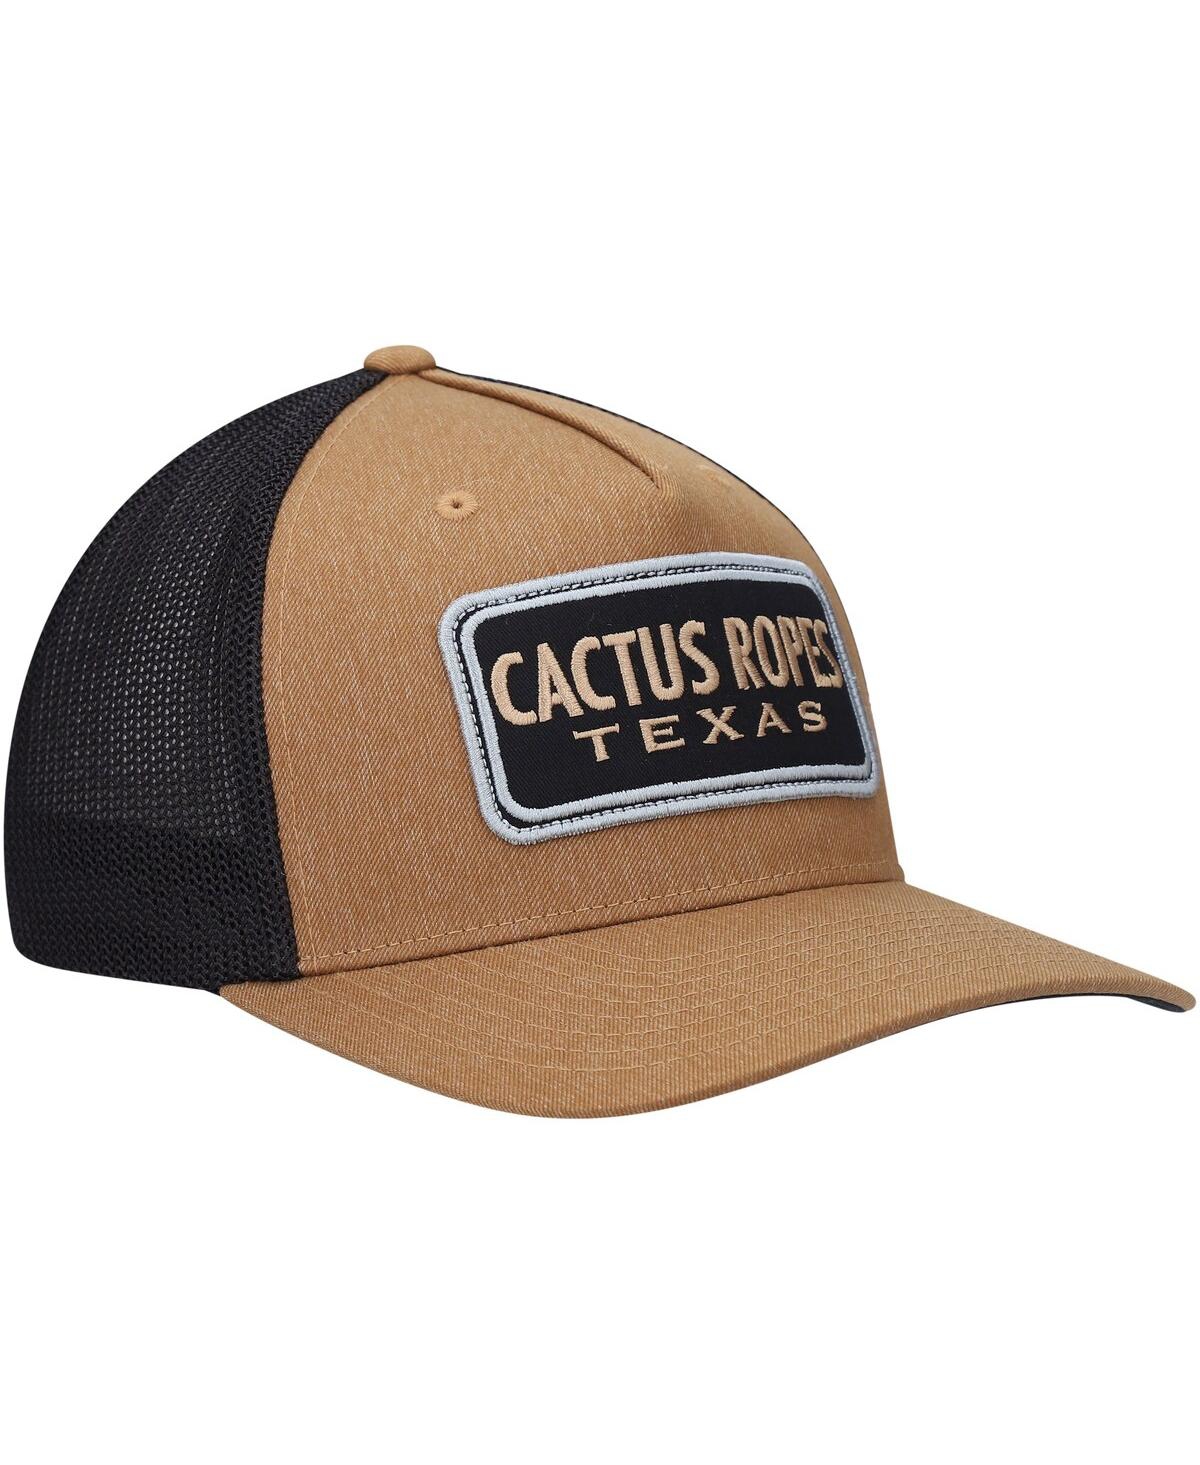 Shop Hooey Men's  Tan, Black Cactus Ropes Trucker Flex Hat In Tan,black